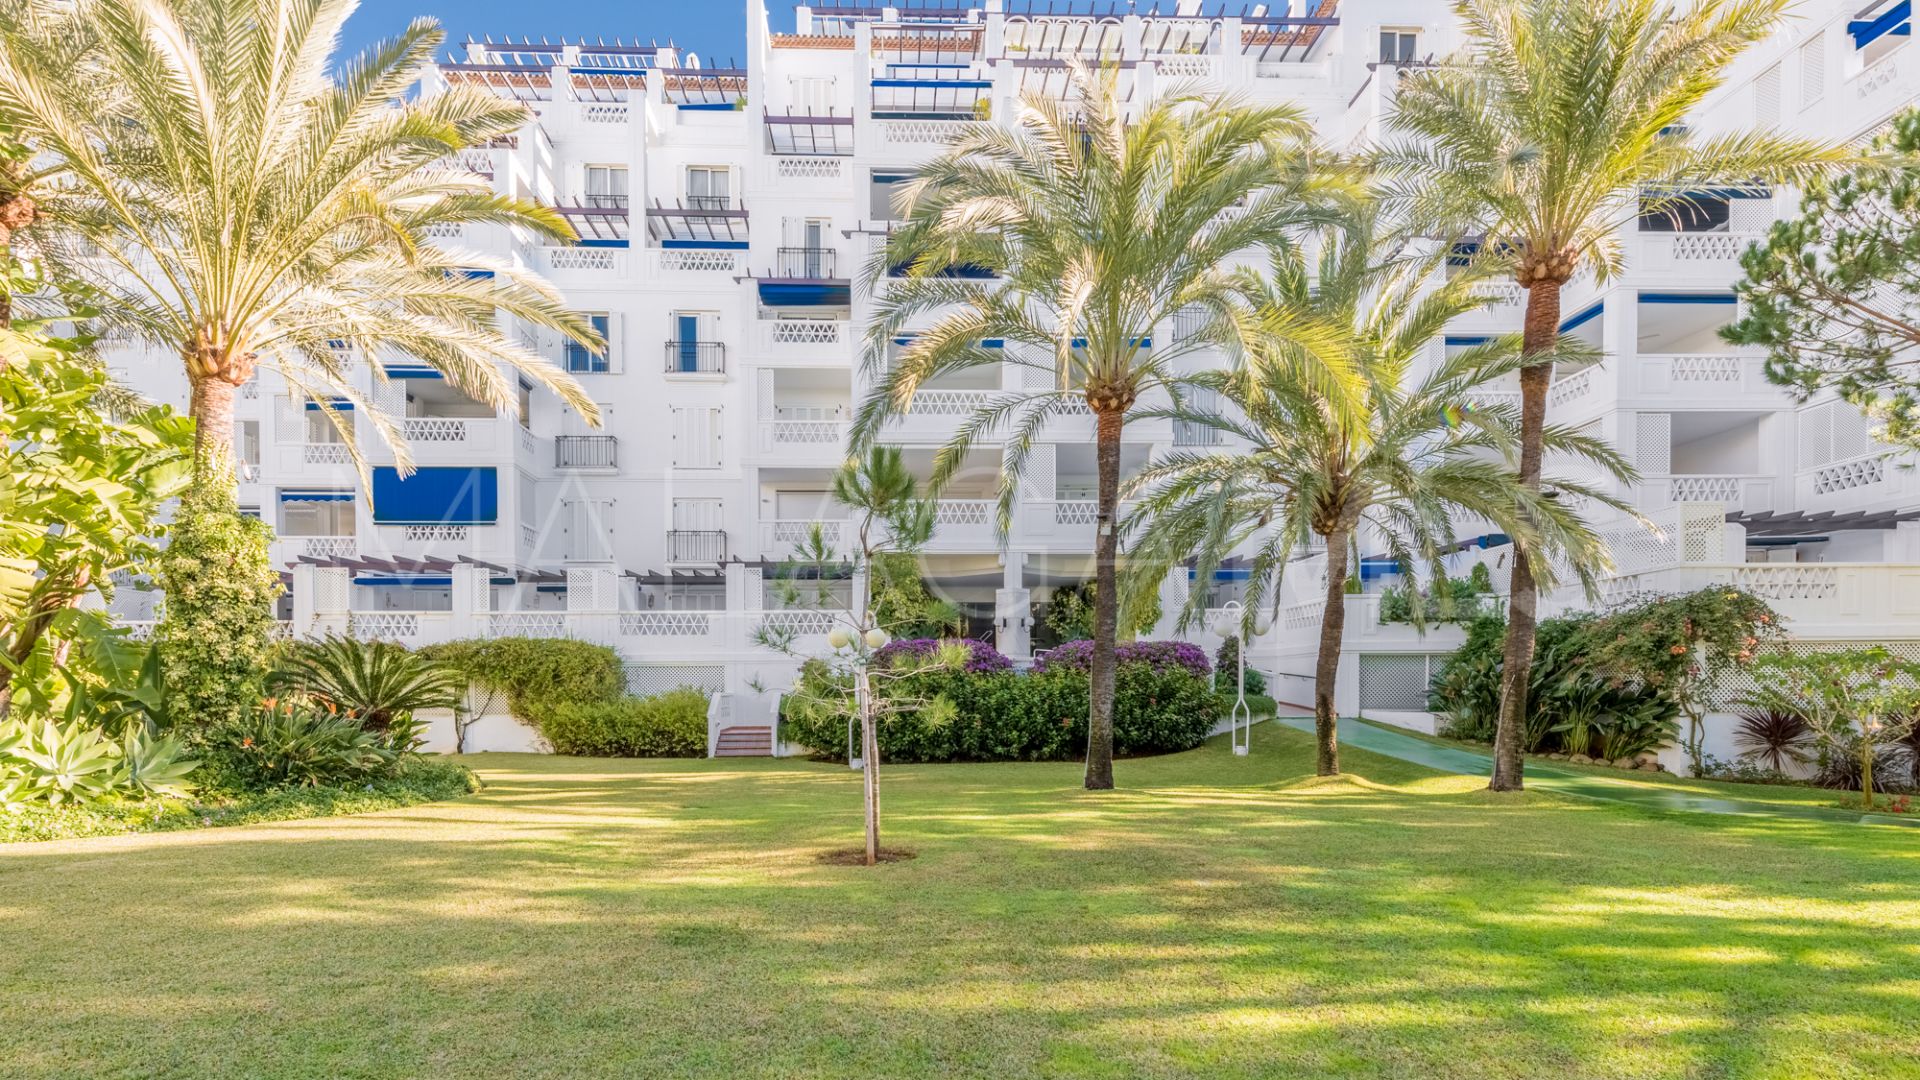 Lägenhet for sale in Playas del Duque